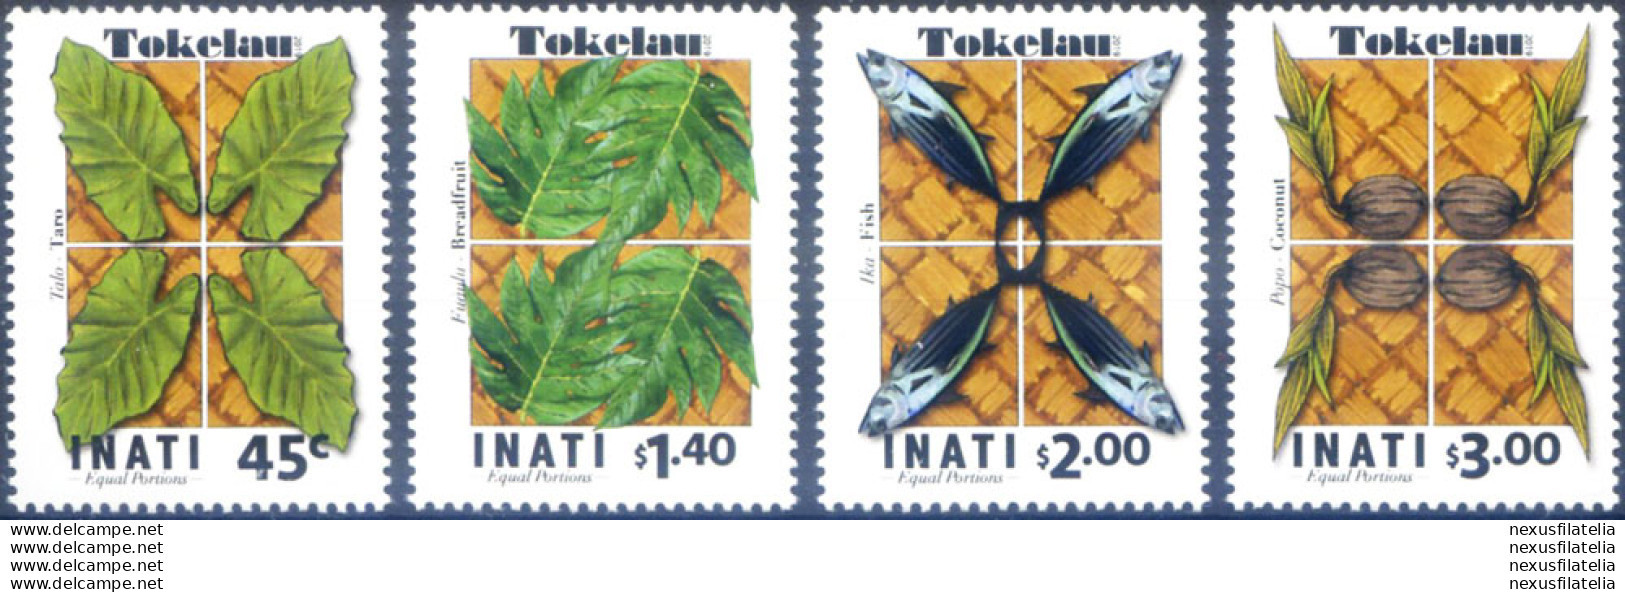 Risorse Naturali 2019. - Tokelau